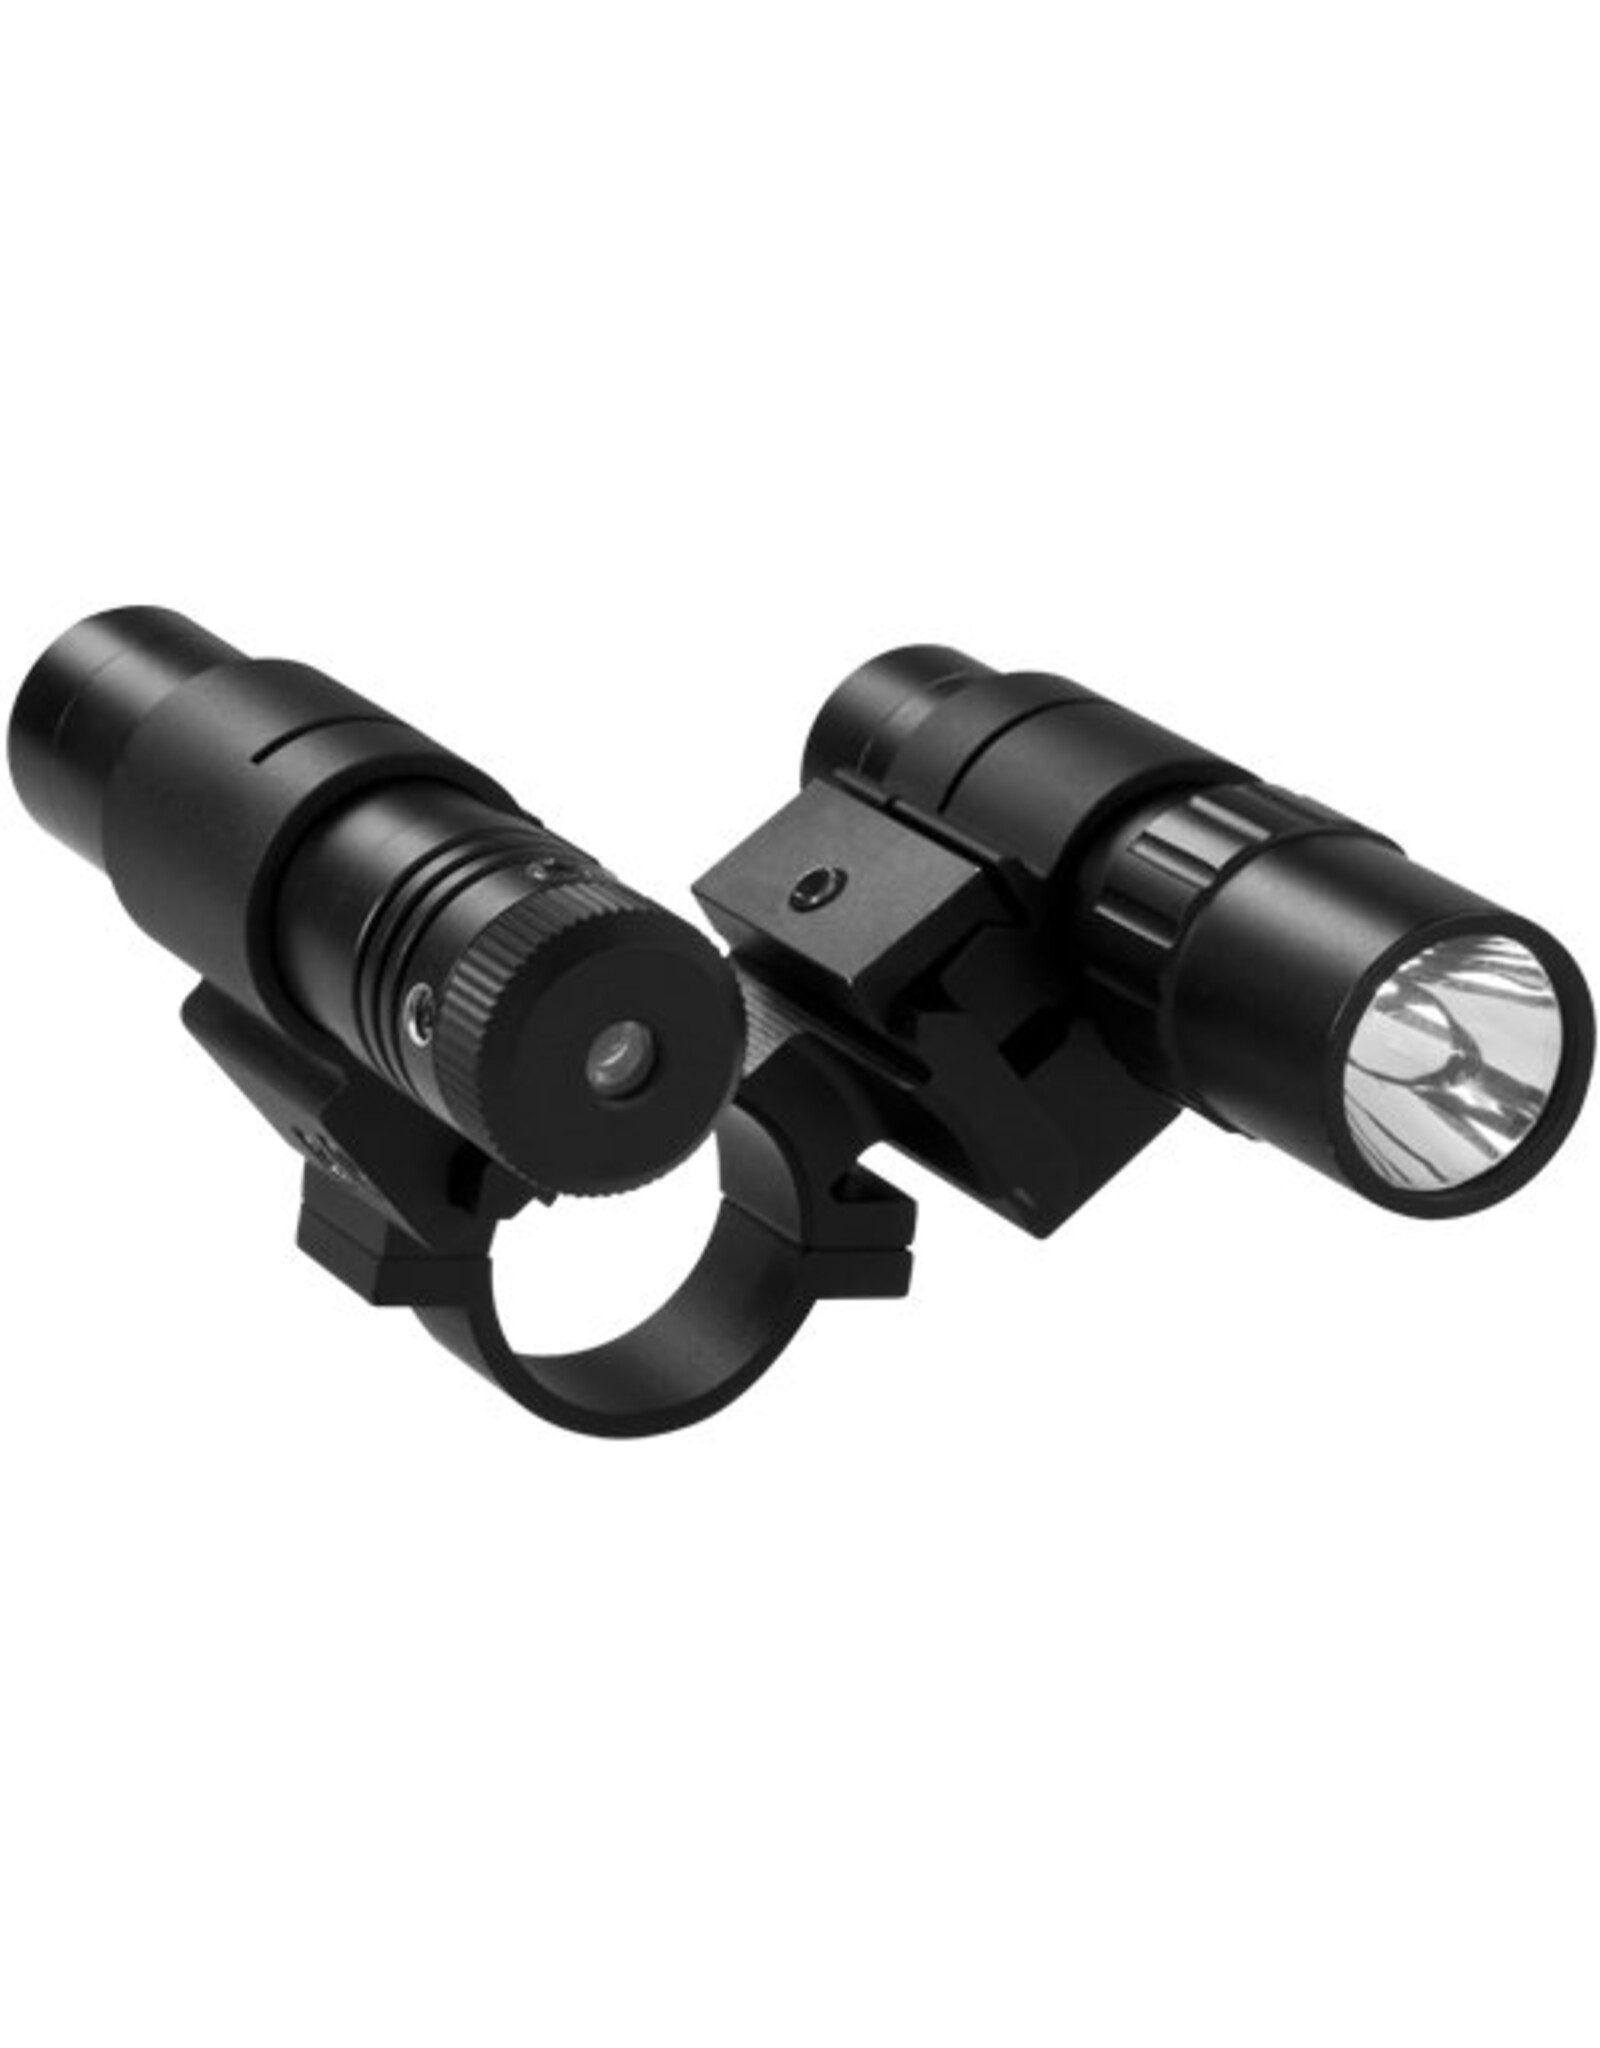 NcStar 1 inch double rail scope adapter/flashlight/green laser set